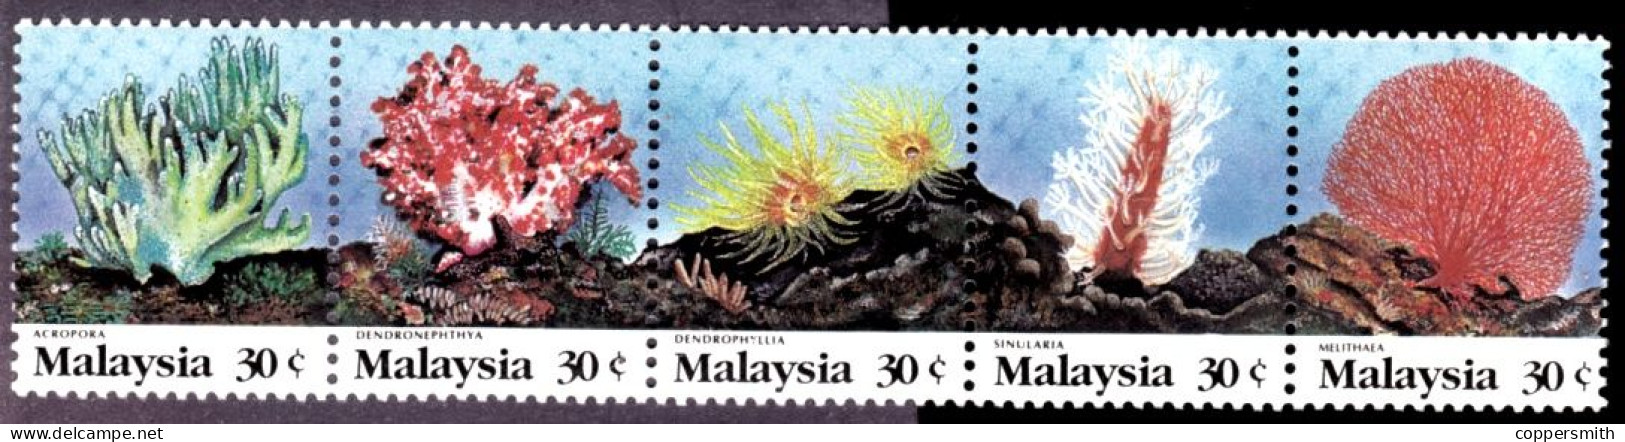 (128) Malaysia / Malaisie  Fauna / Animals / Corals / Coraux / Korallen ** / Mnh  Michel 475-479 - Malaysia (1964-...)